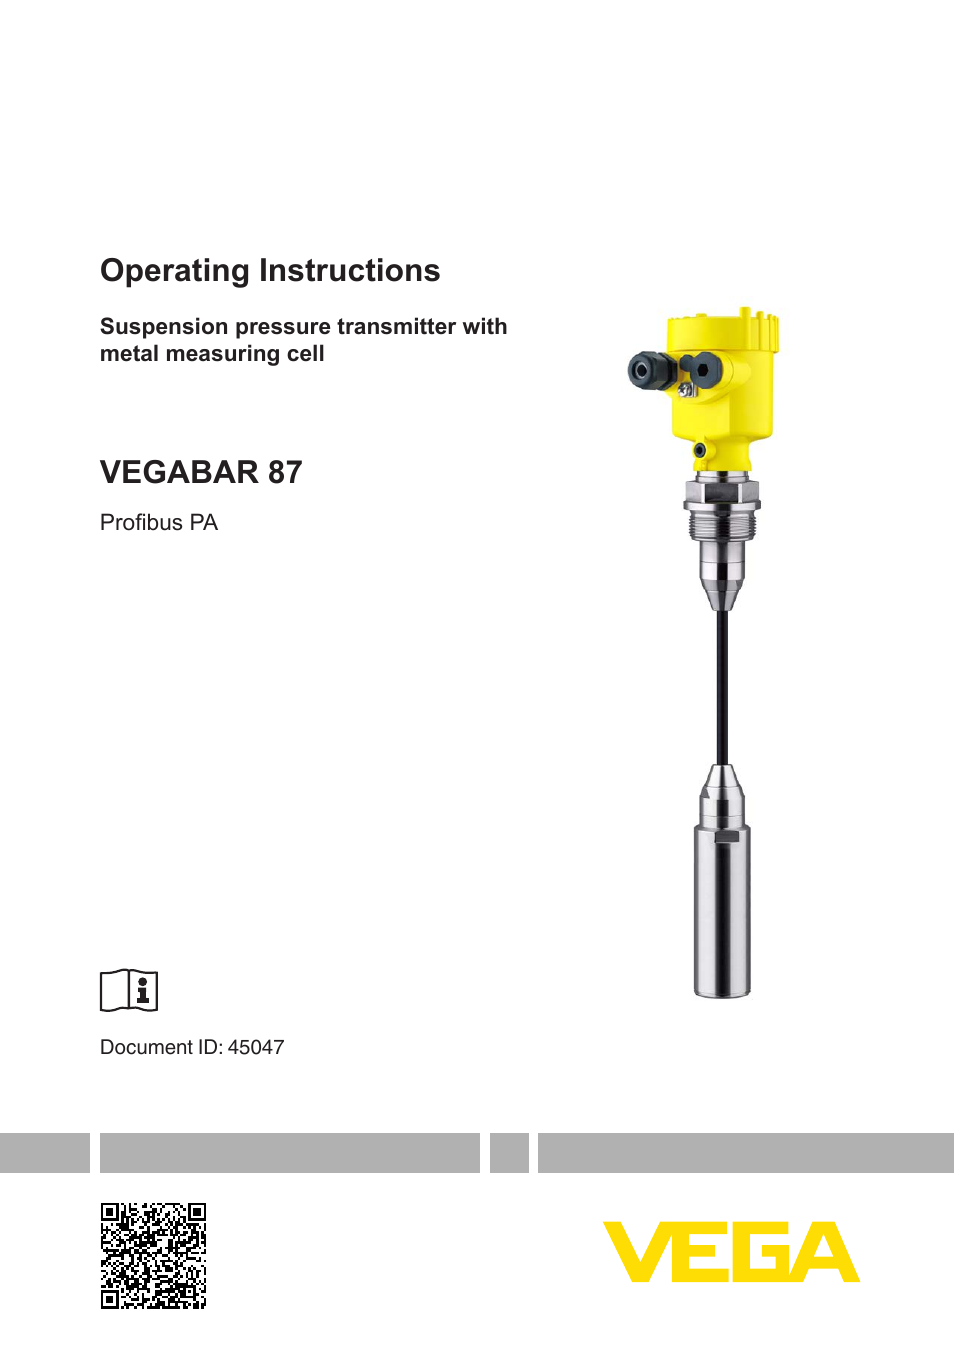 VEGABAR 87 Profibus PA - Operating Instructions